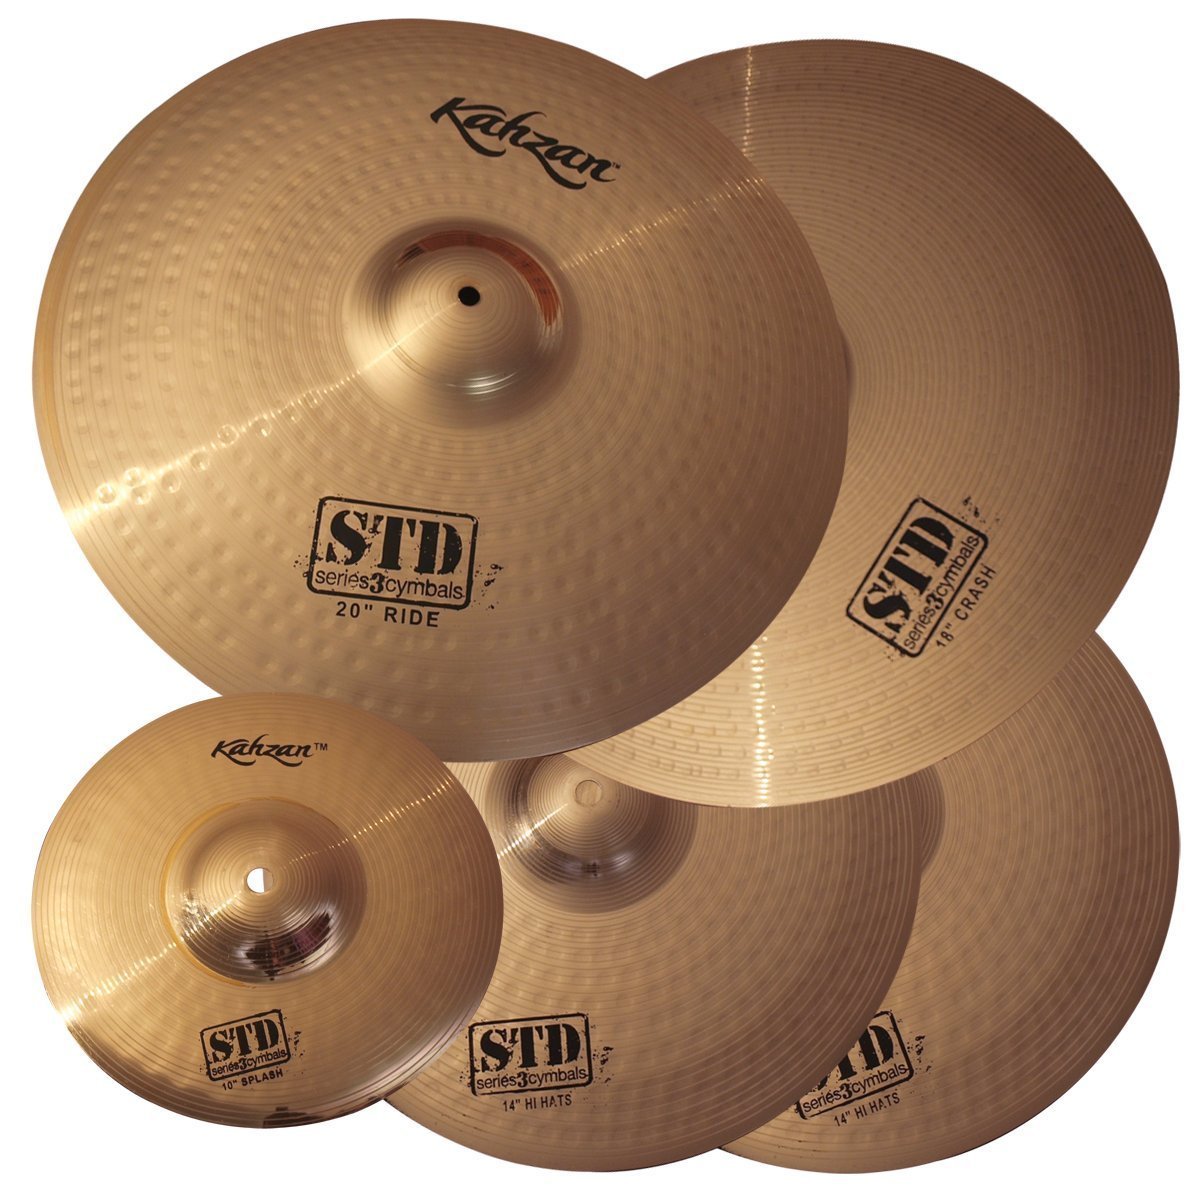 Kahzan 'STD-3 Series' Cymbal Pack (14"/18"/20")-KP-STDP3-14-18-20